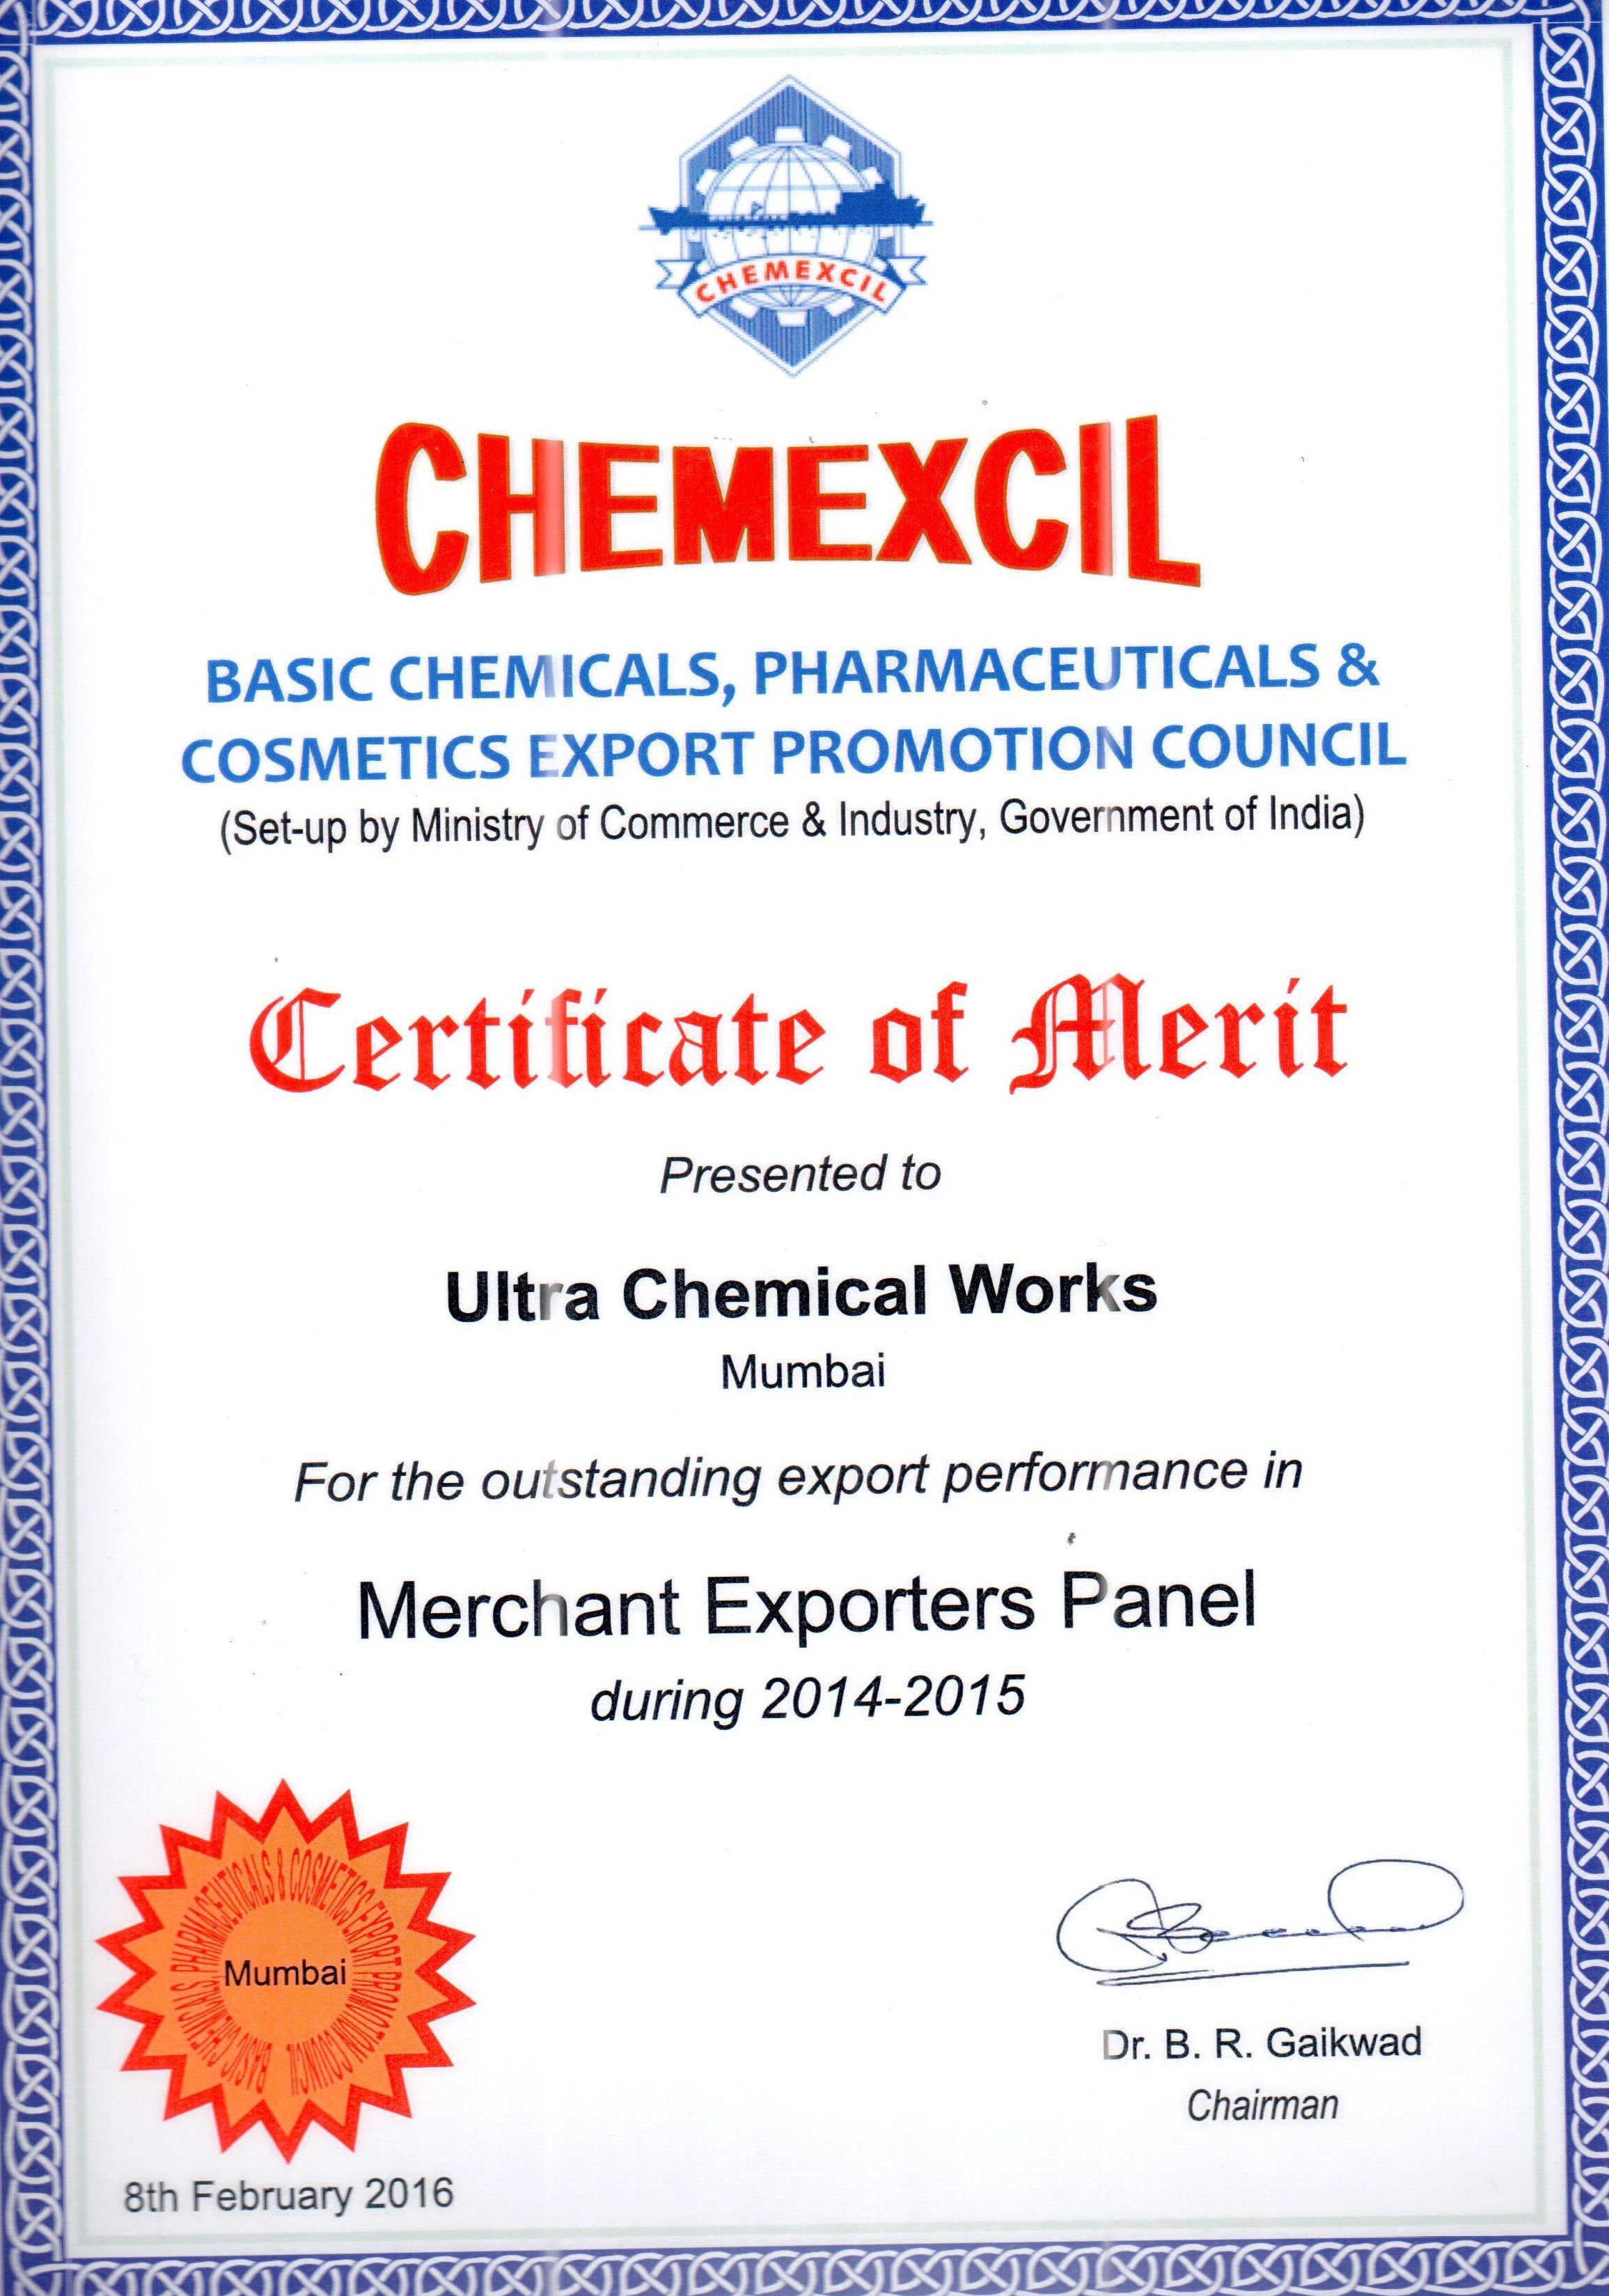 Chemexcil Award for 2014-2015